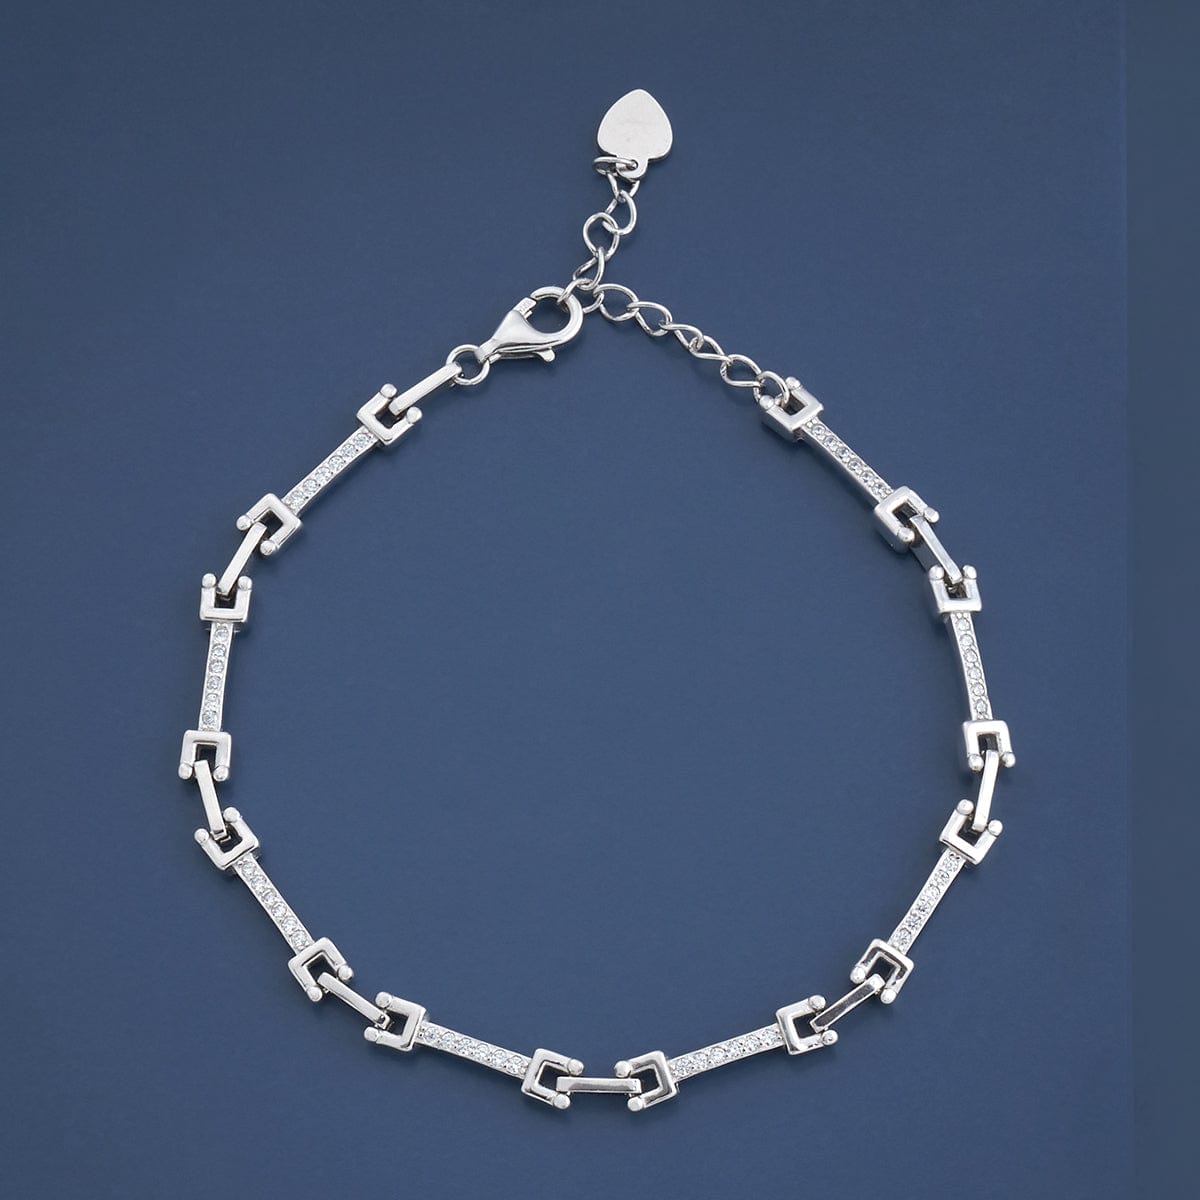 Ocean Creatures Charm Bracelet - Sterling Silver Bracelet with Sea Lif –  Mark Poulin Jewelry